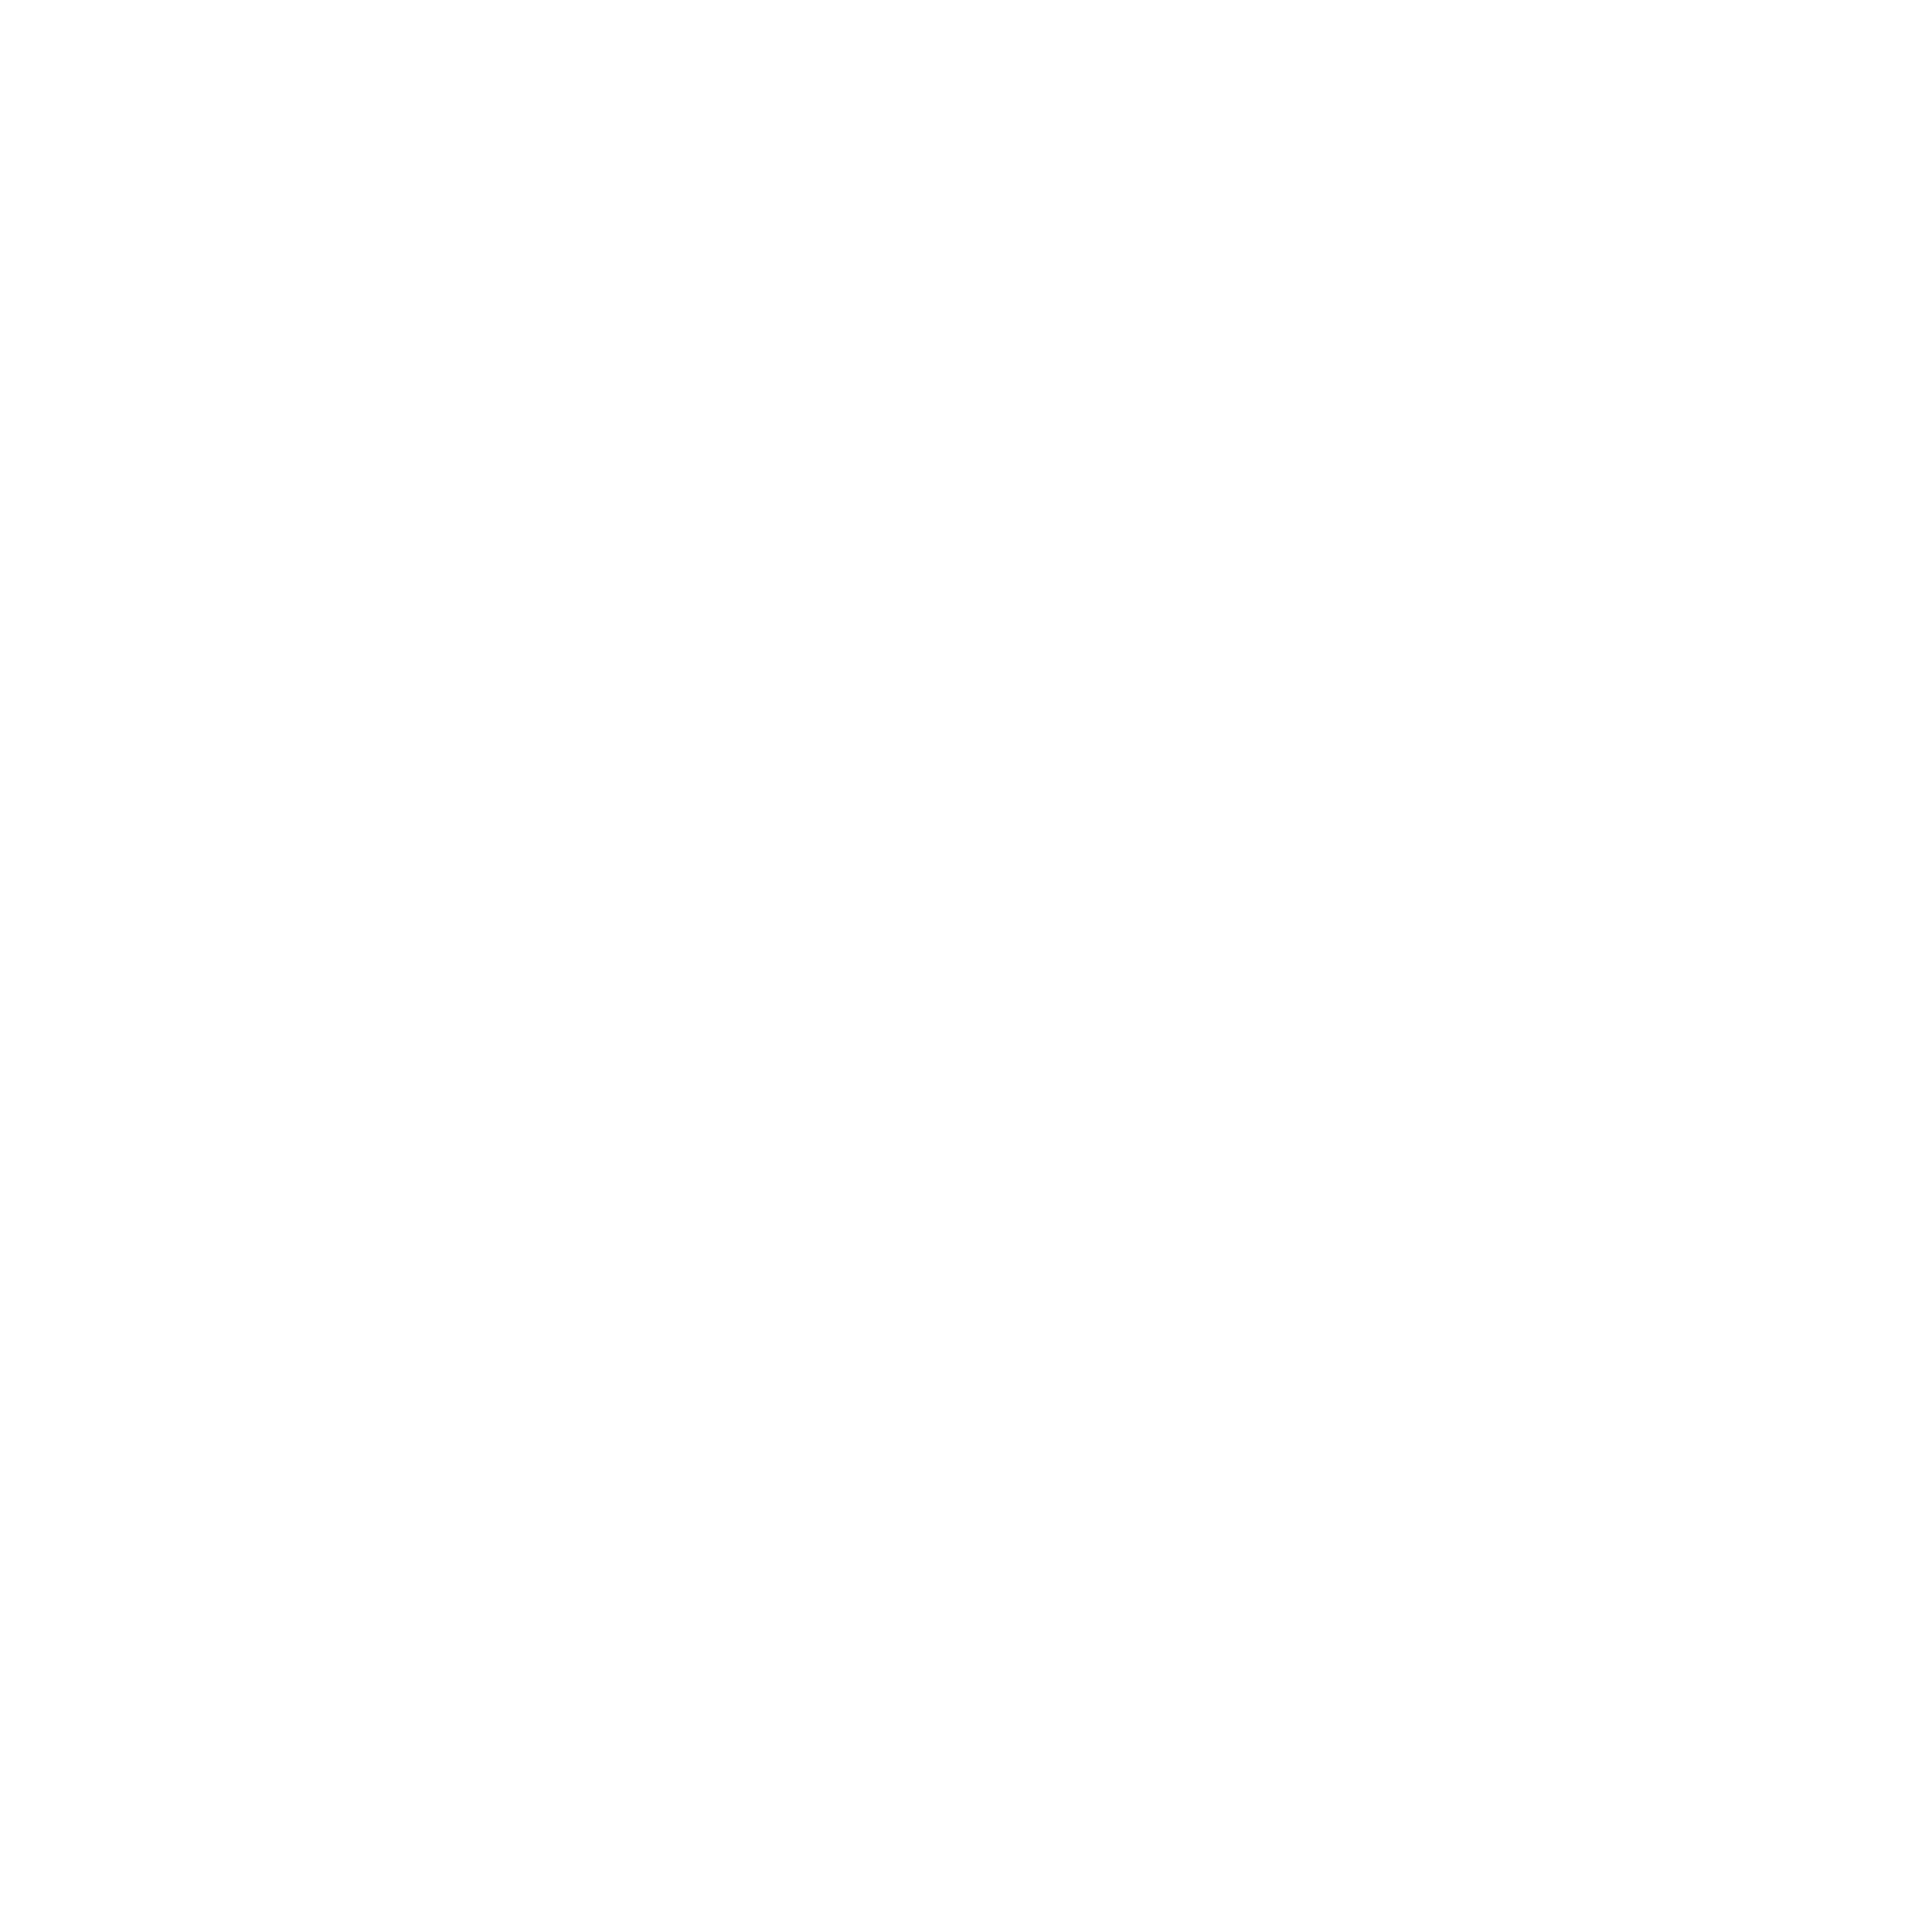 KS Travel Consultants